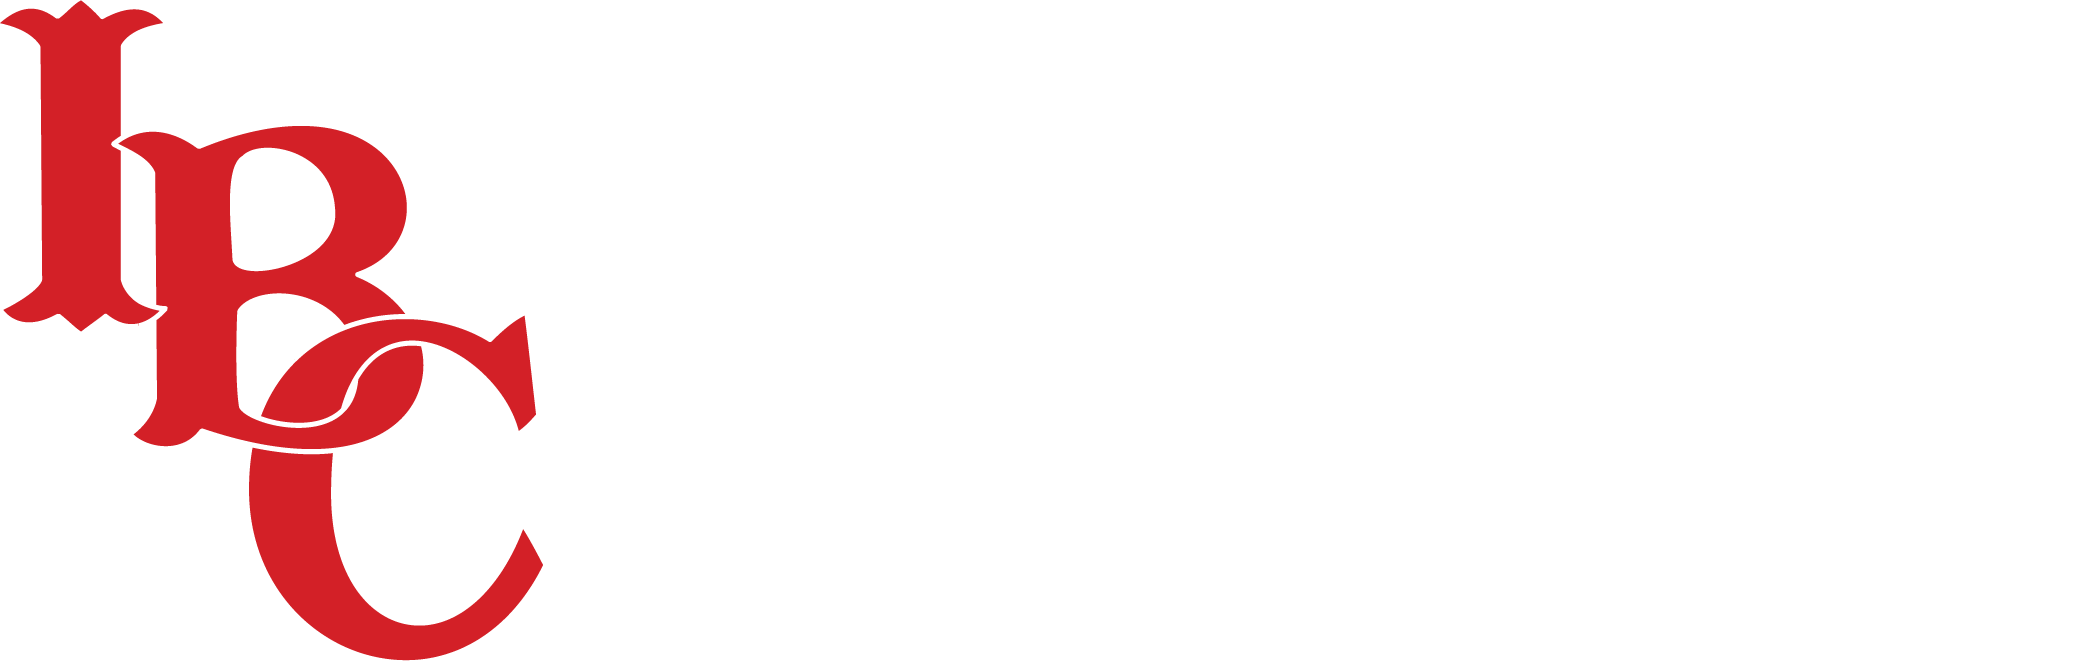 Immanuel Baptist Chuch